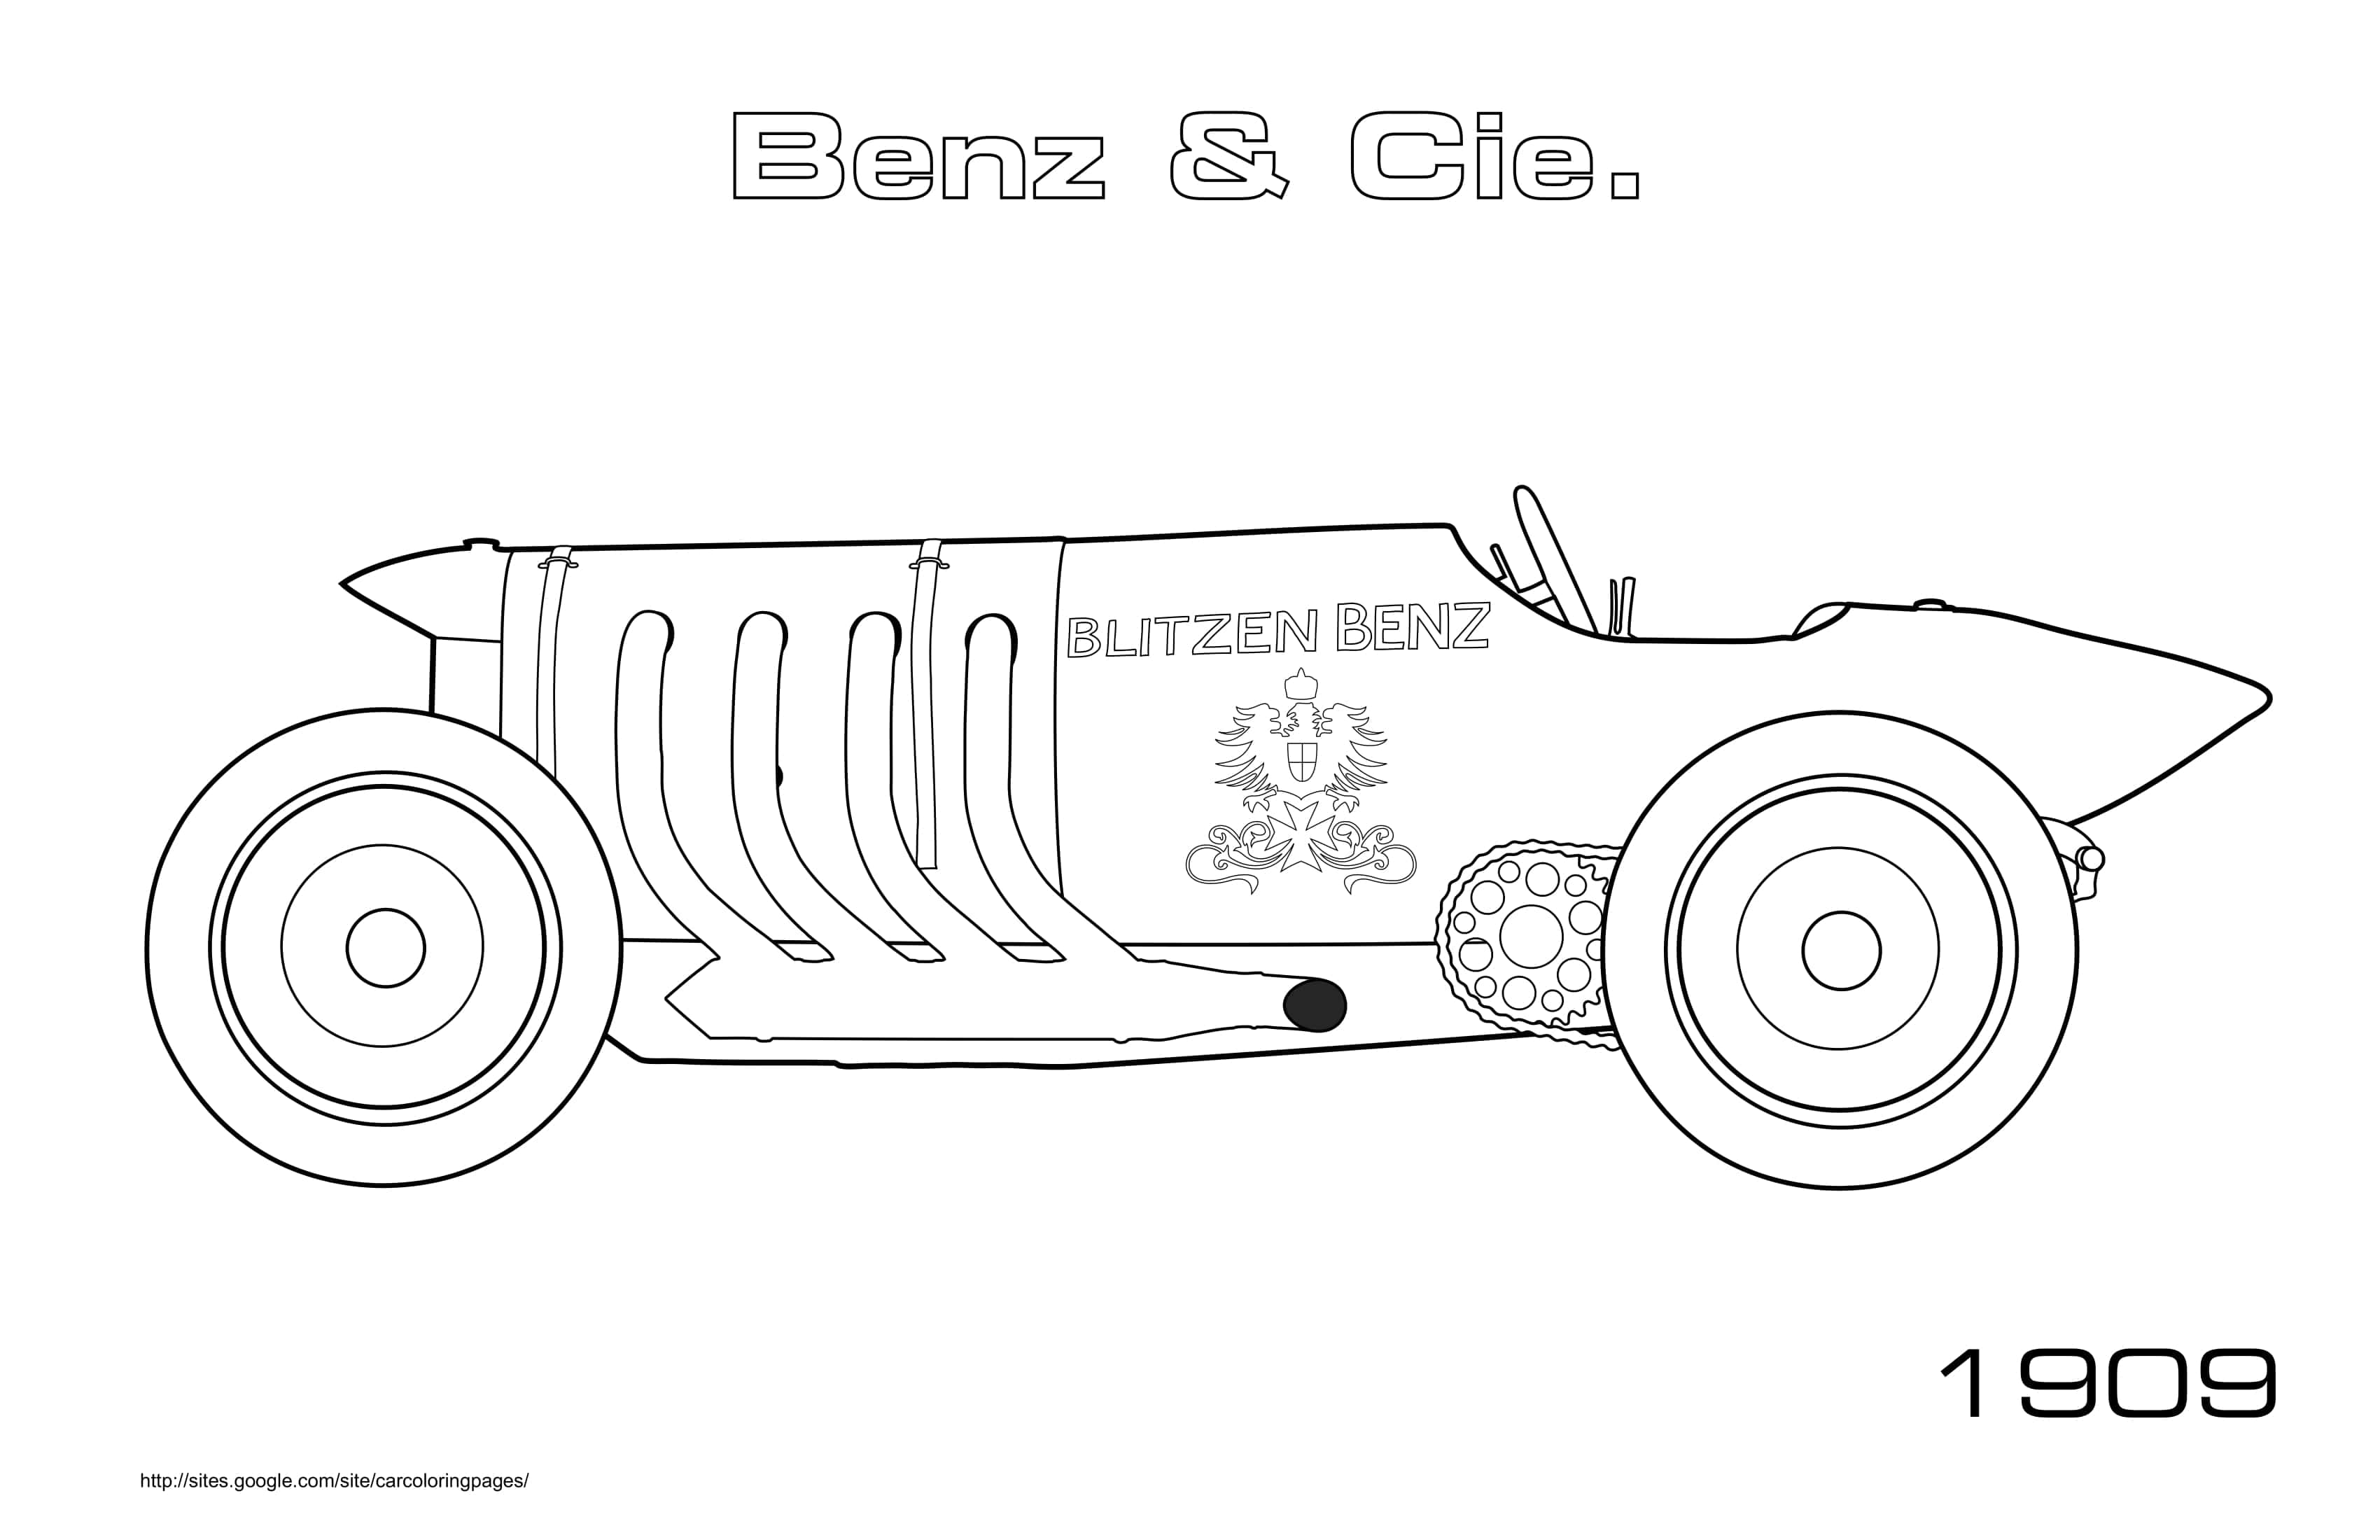 Old Car Benz Cie Blitzen Benz 1909 Coloring Page